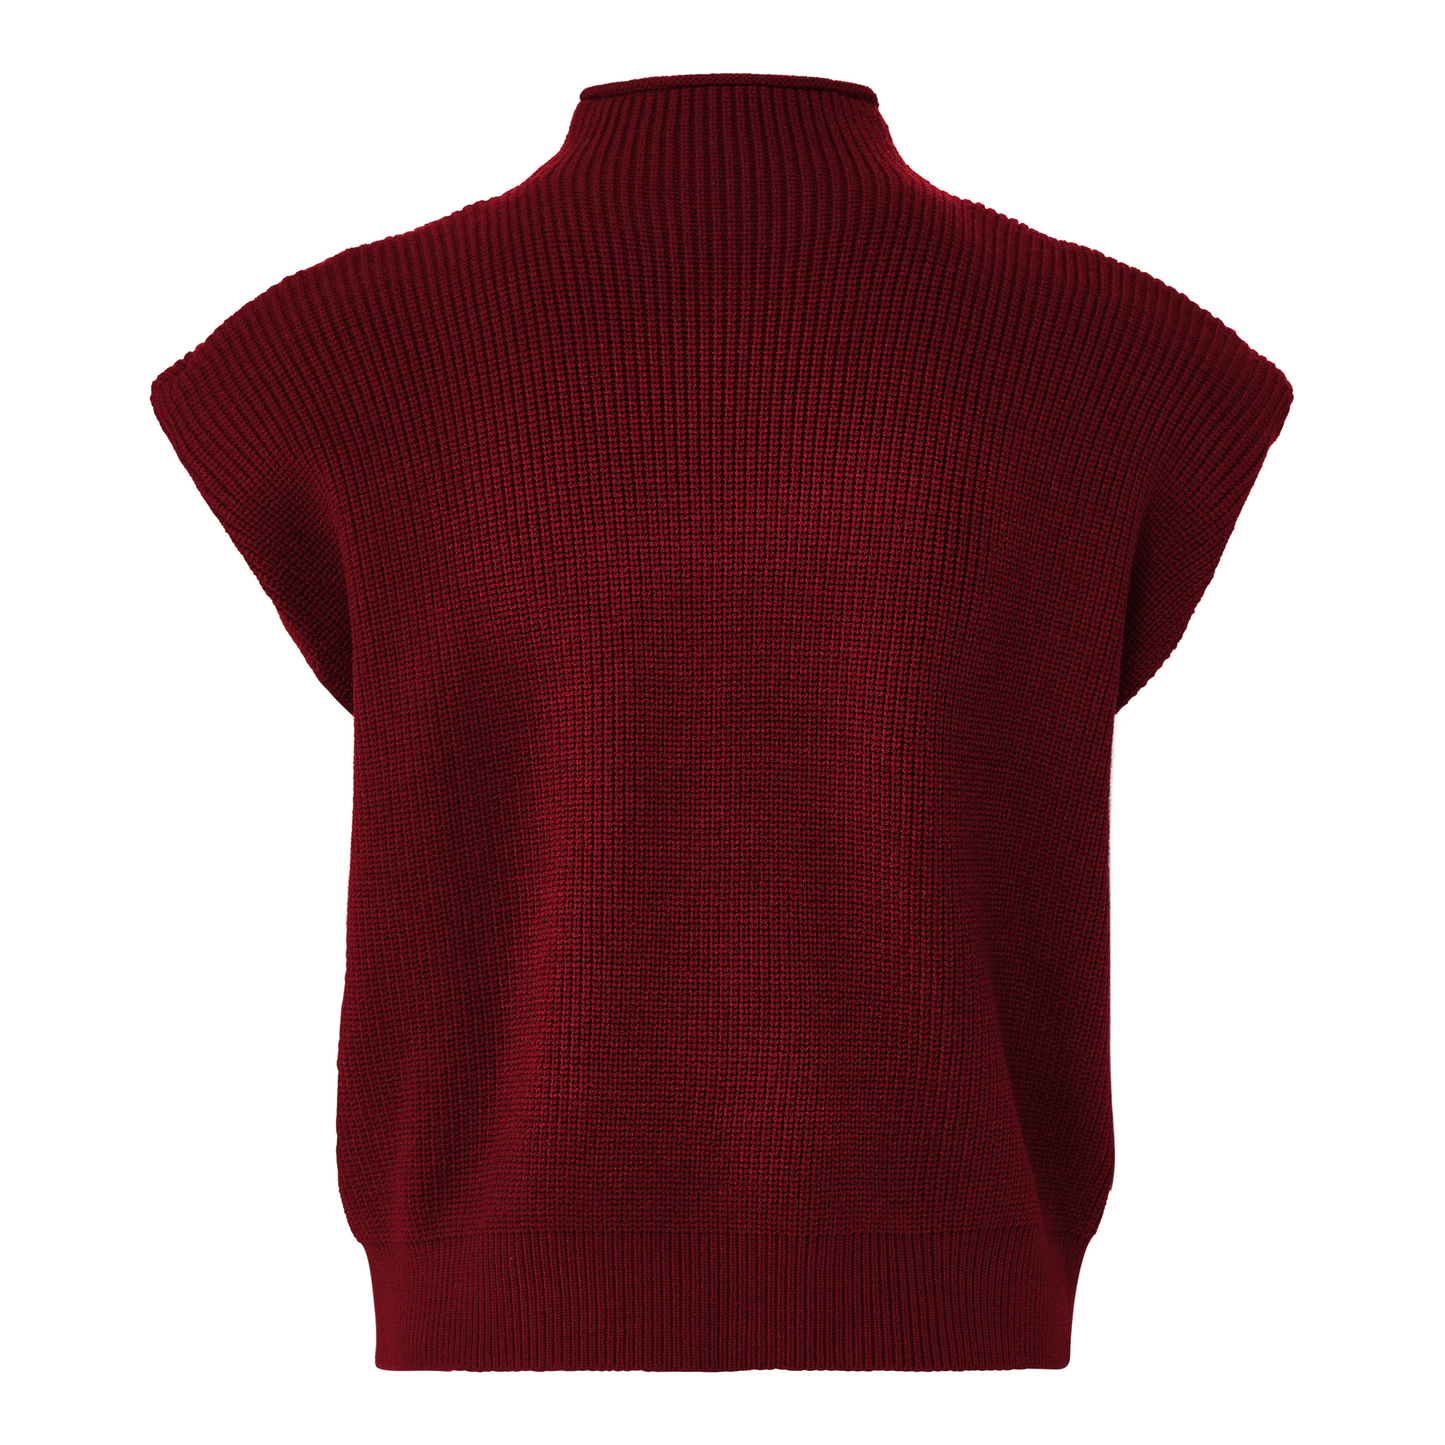 Sleeveless Sweater Top - Burgundy